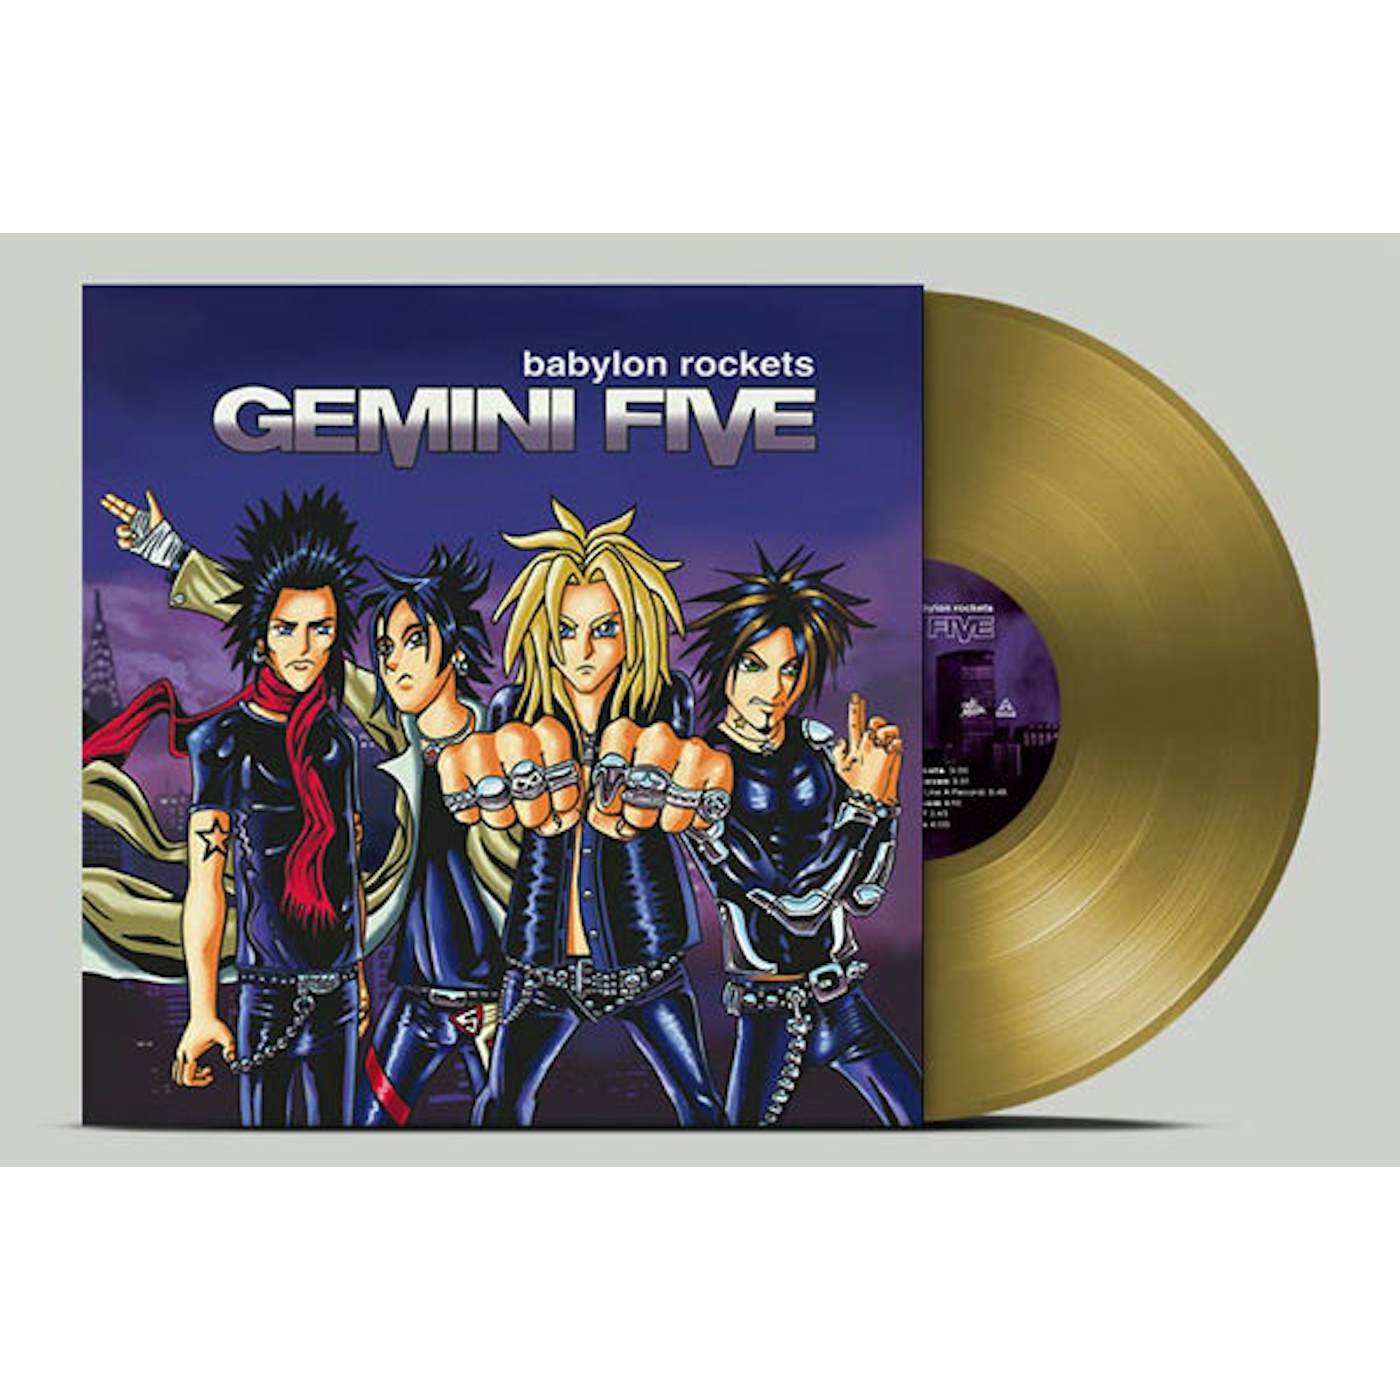 Gemini Five LP - Babylon Rockets (Gold Vinyl)